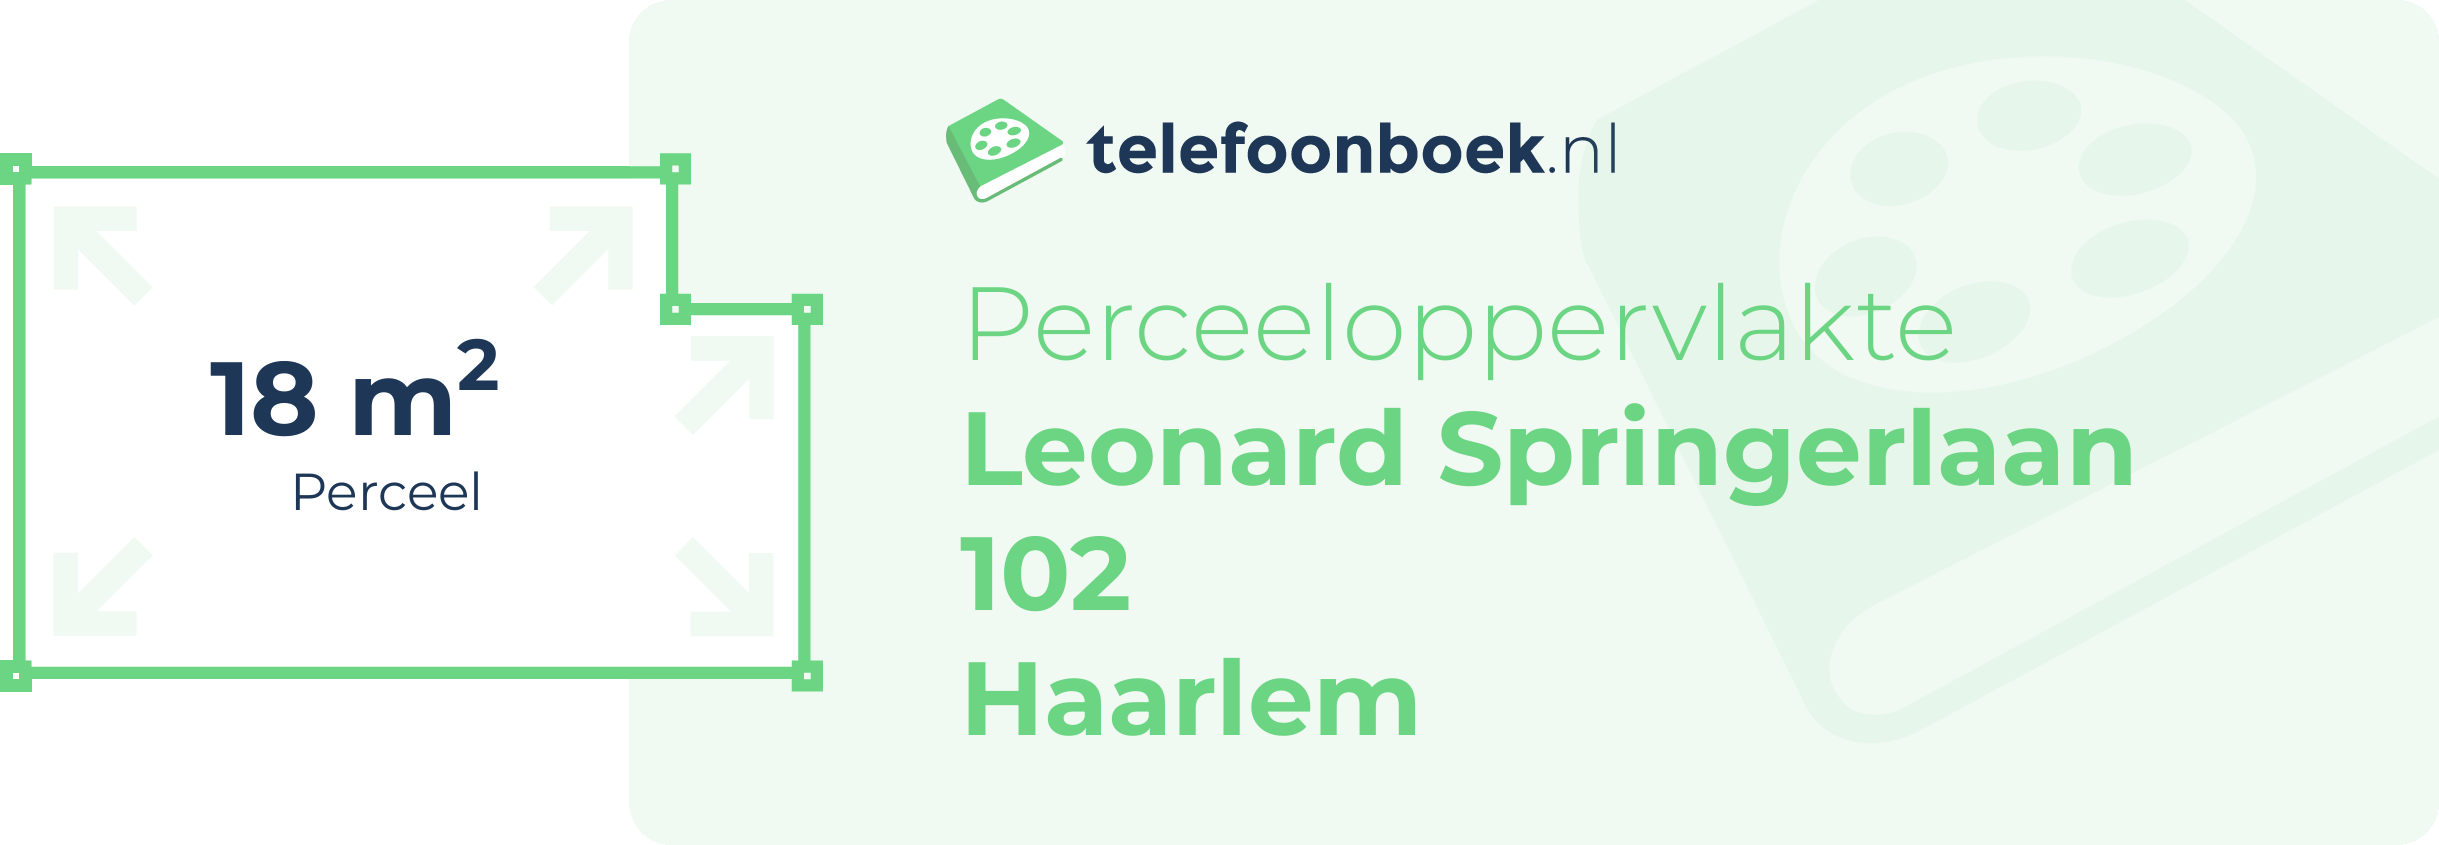 Perceeloppervlakte Leonard Springerlaan 102 Haarlem